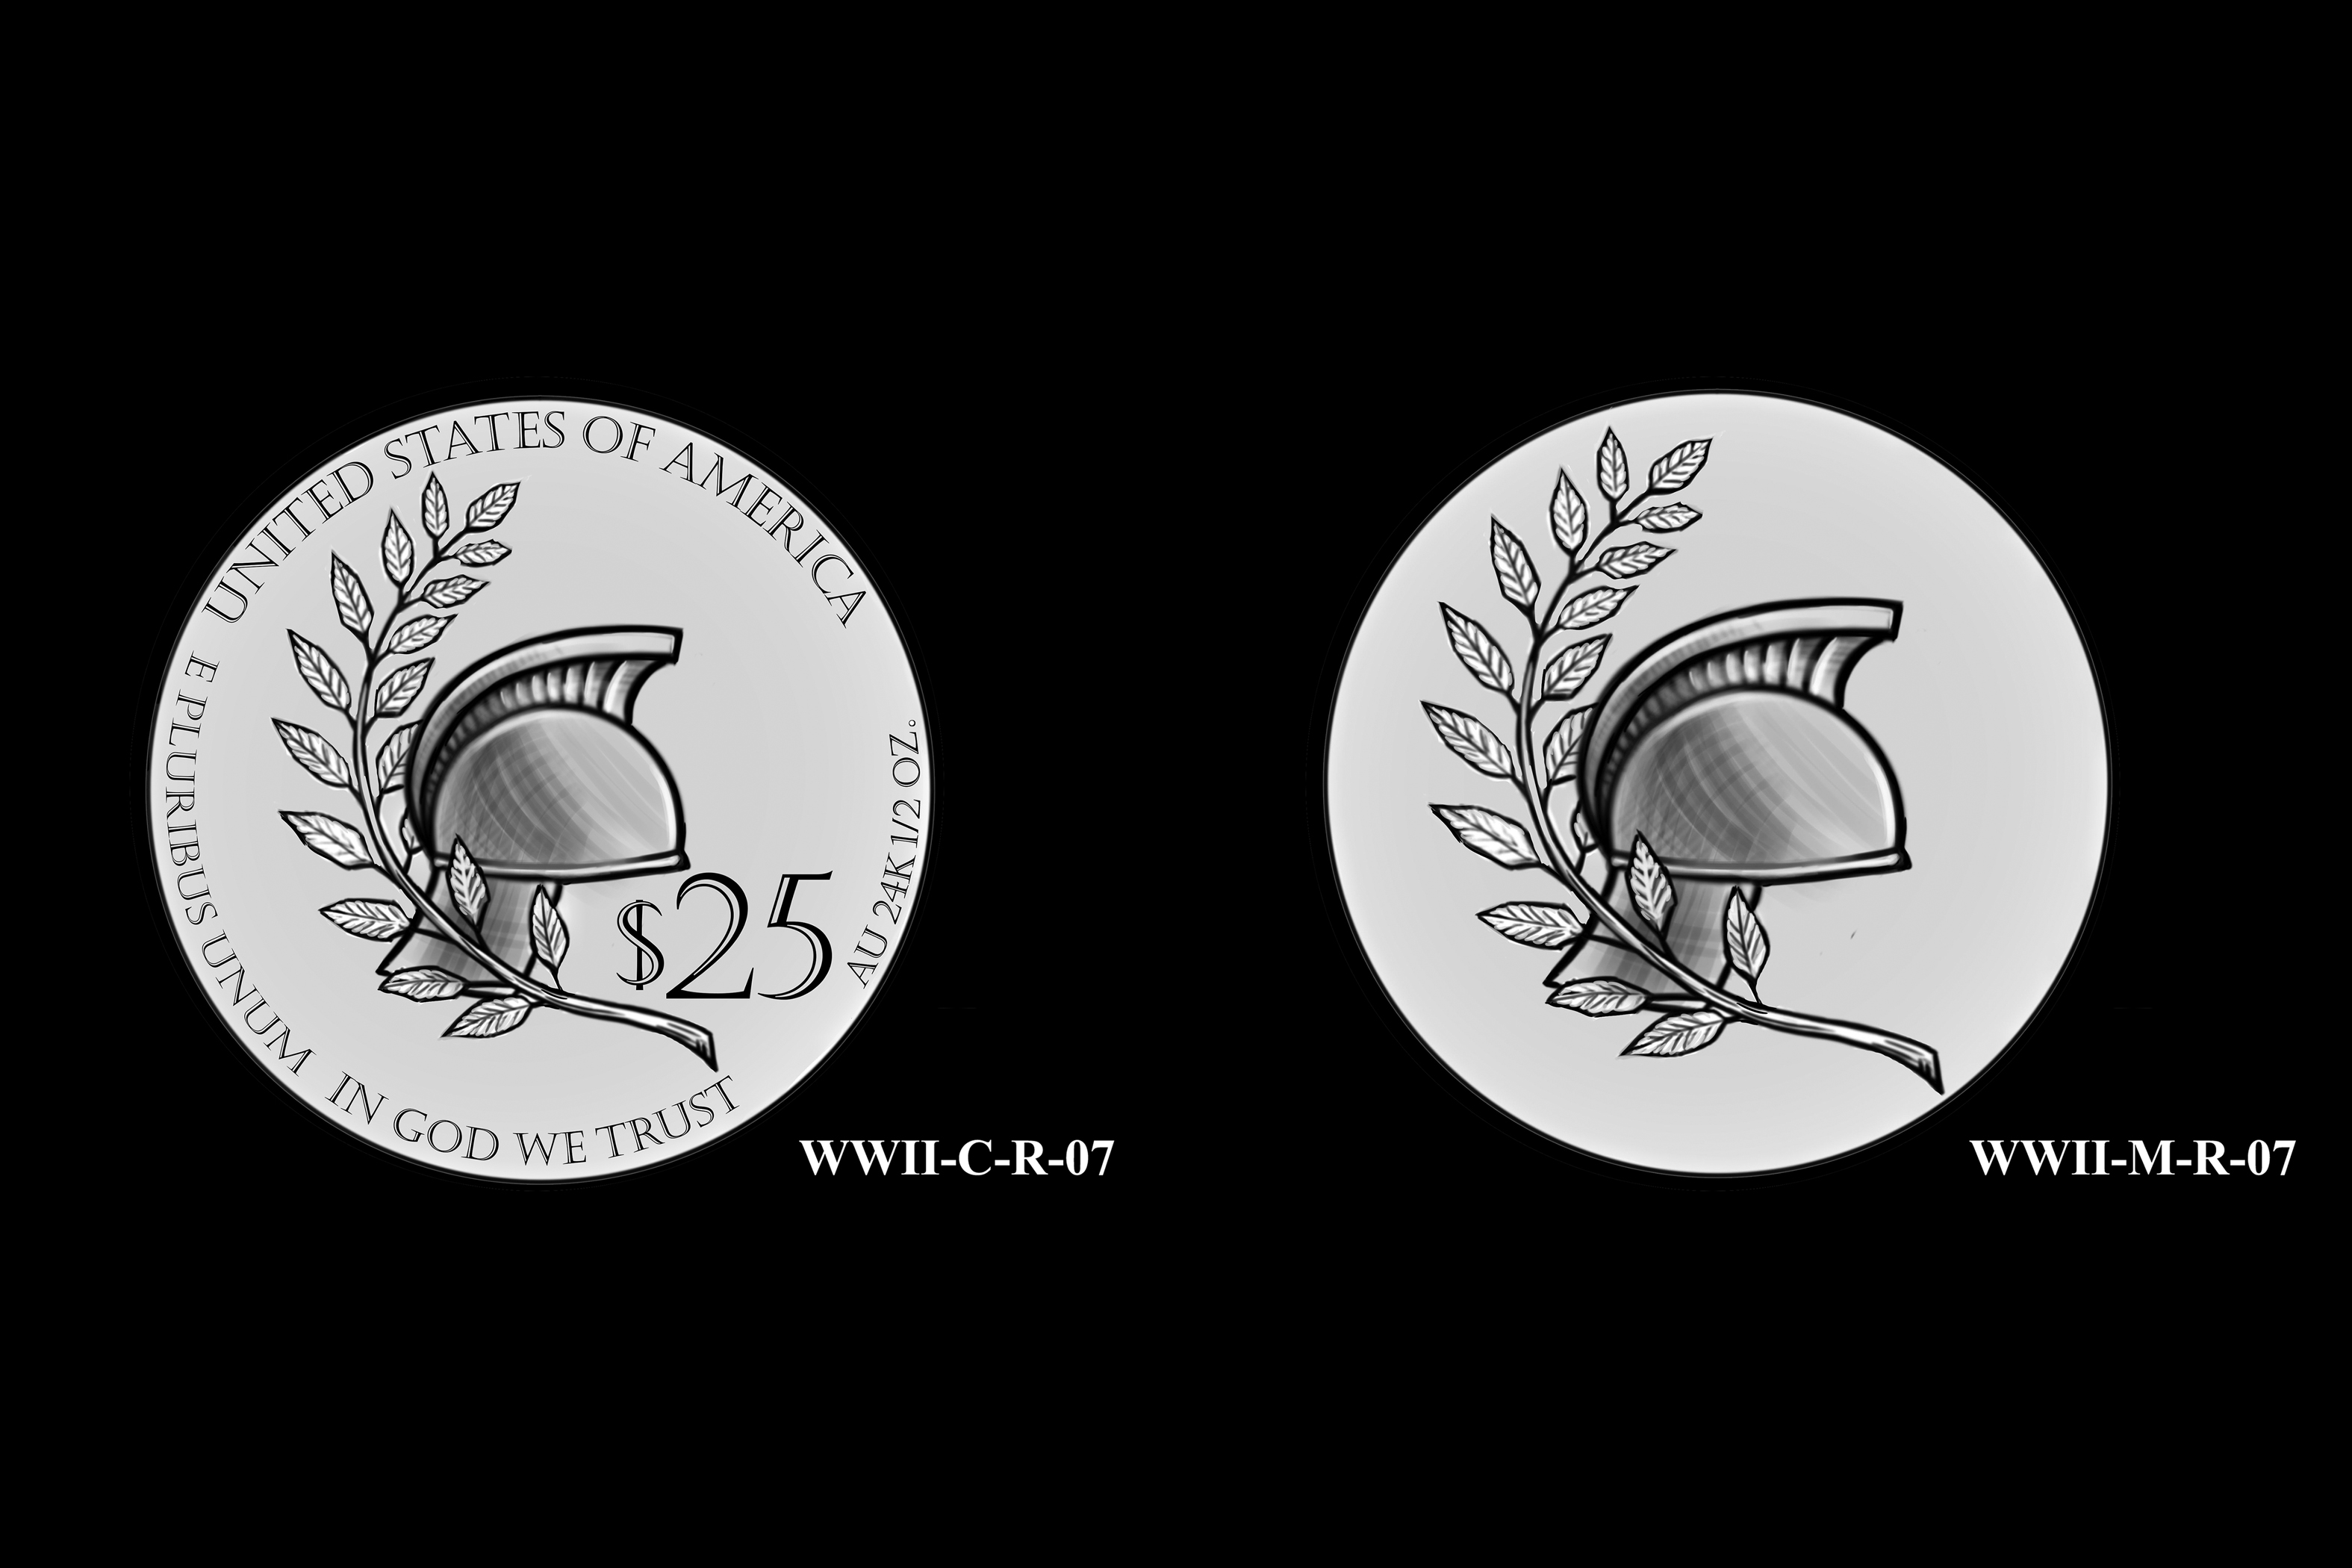 WWII-C-R-07 and WWII-M-R-07 -- End of World War II 75th Anniversary Program - Reverse